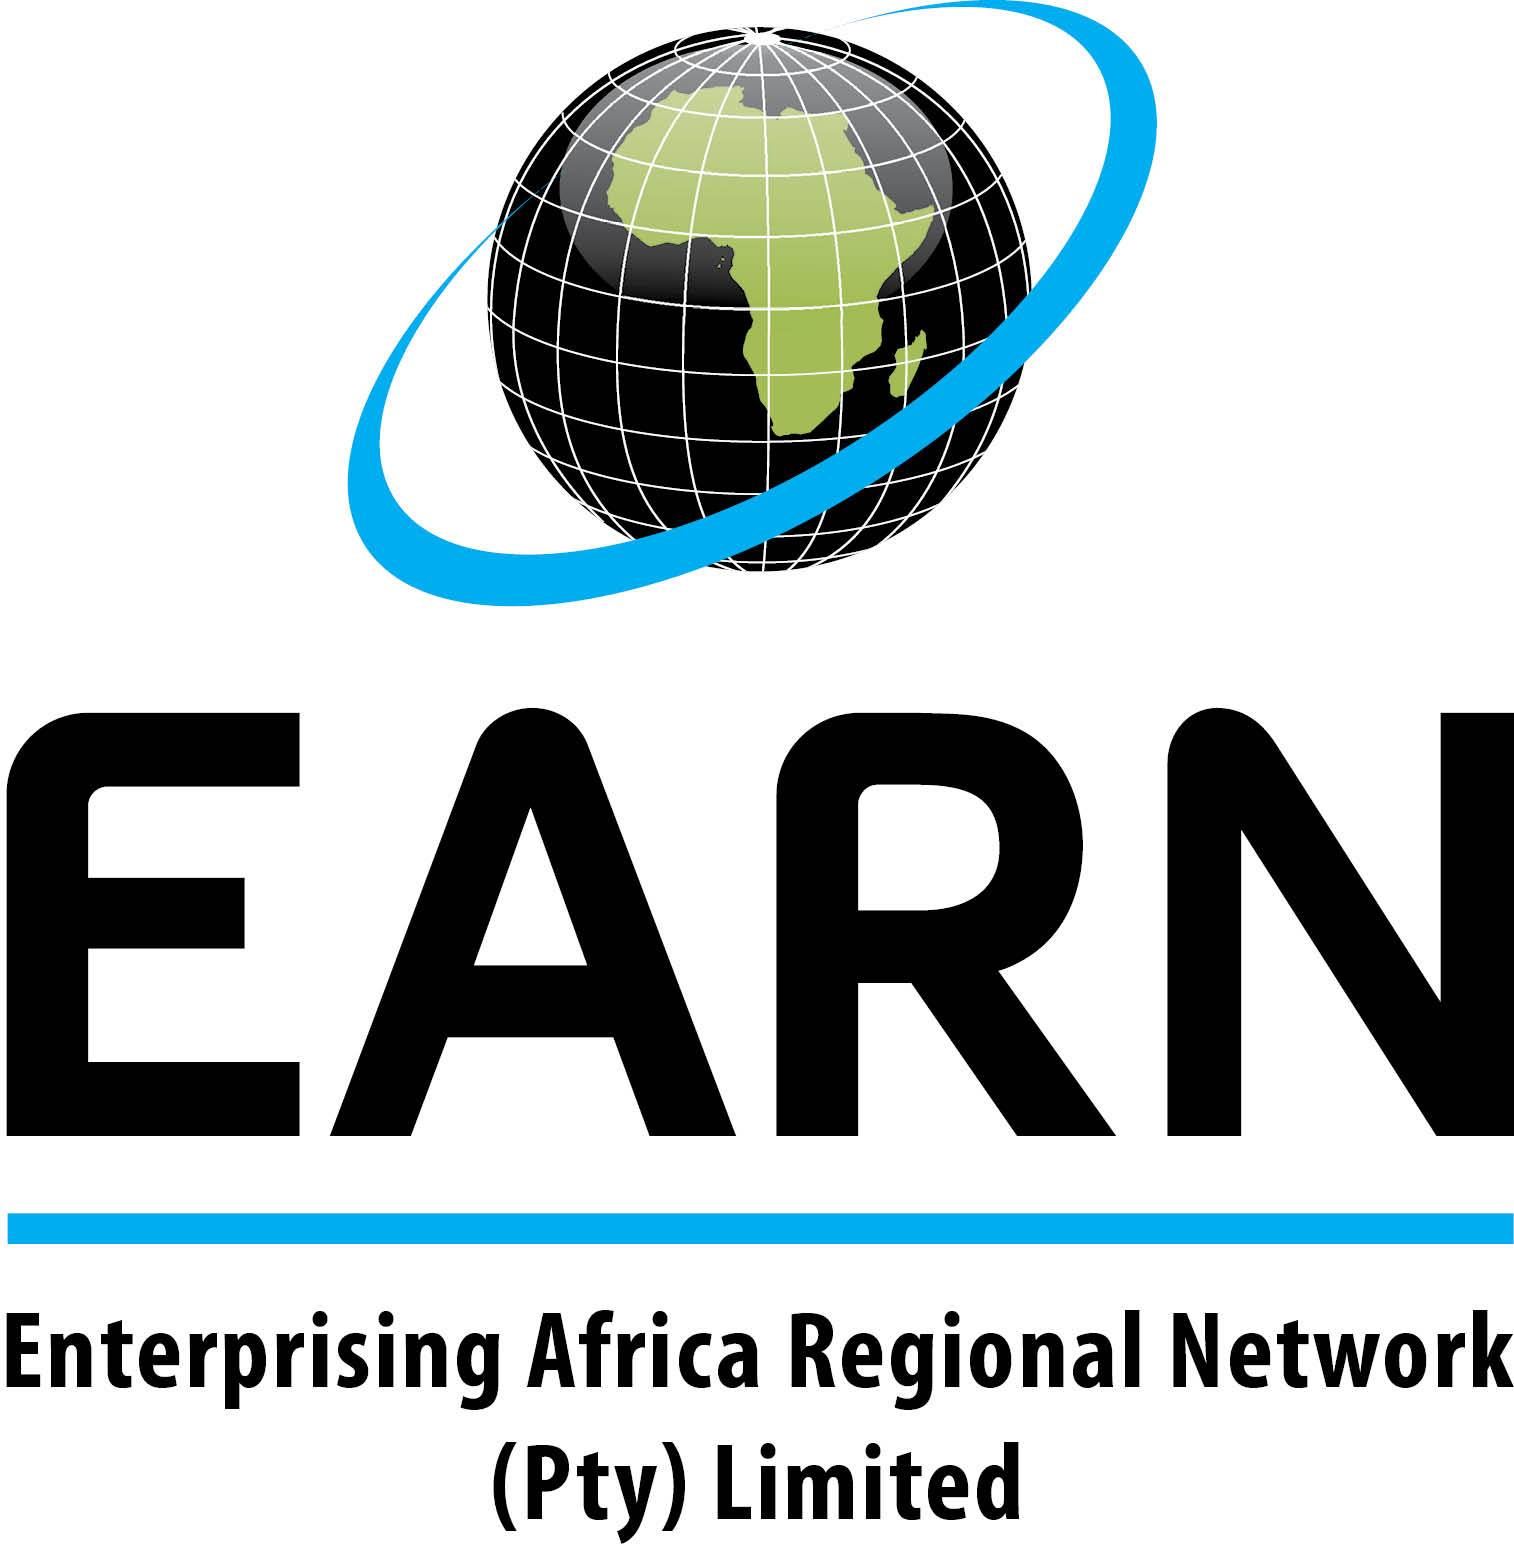 Enterprising Africa Regional Network